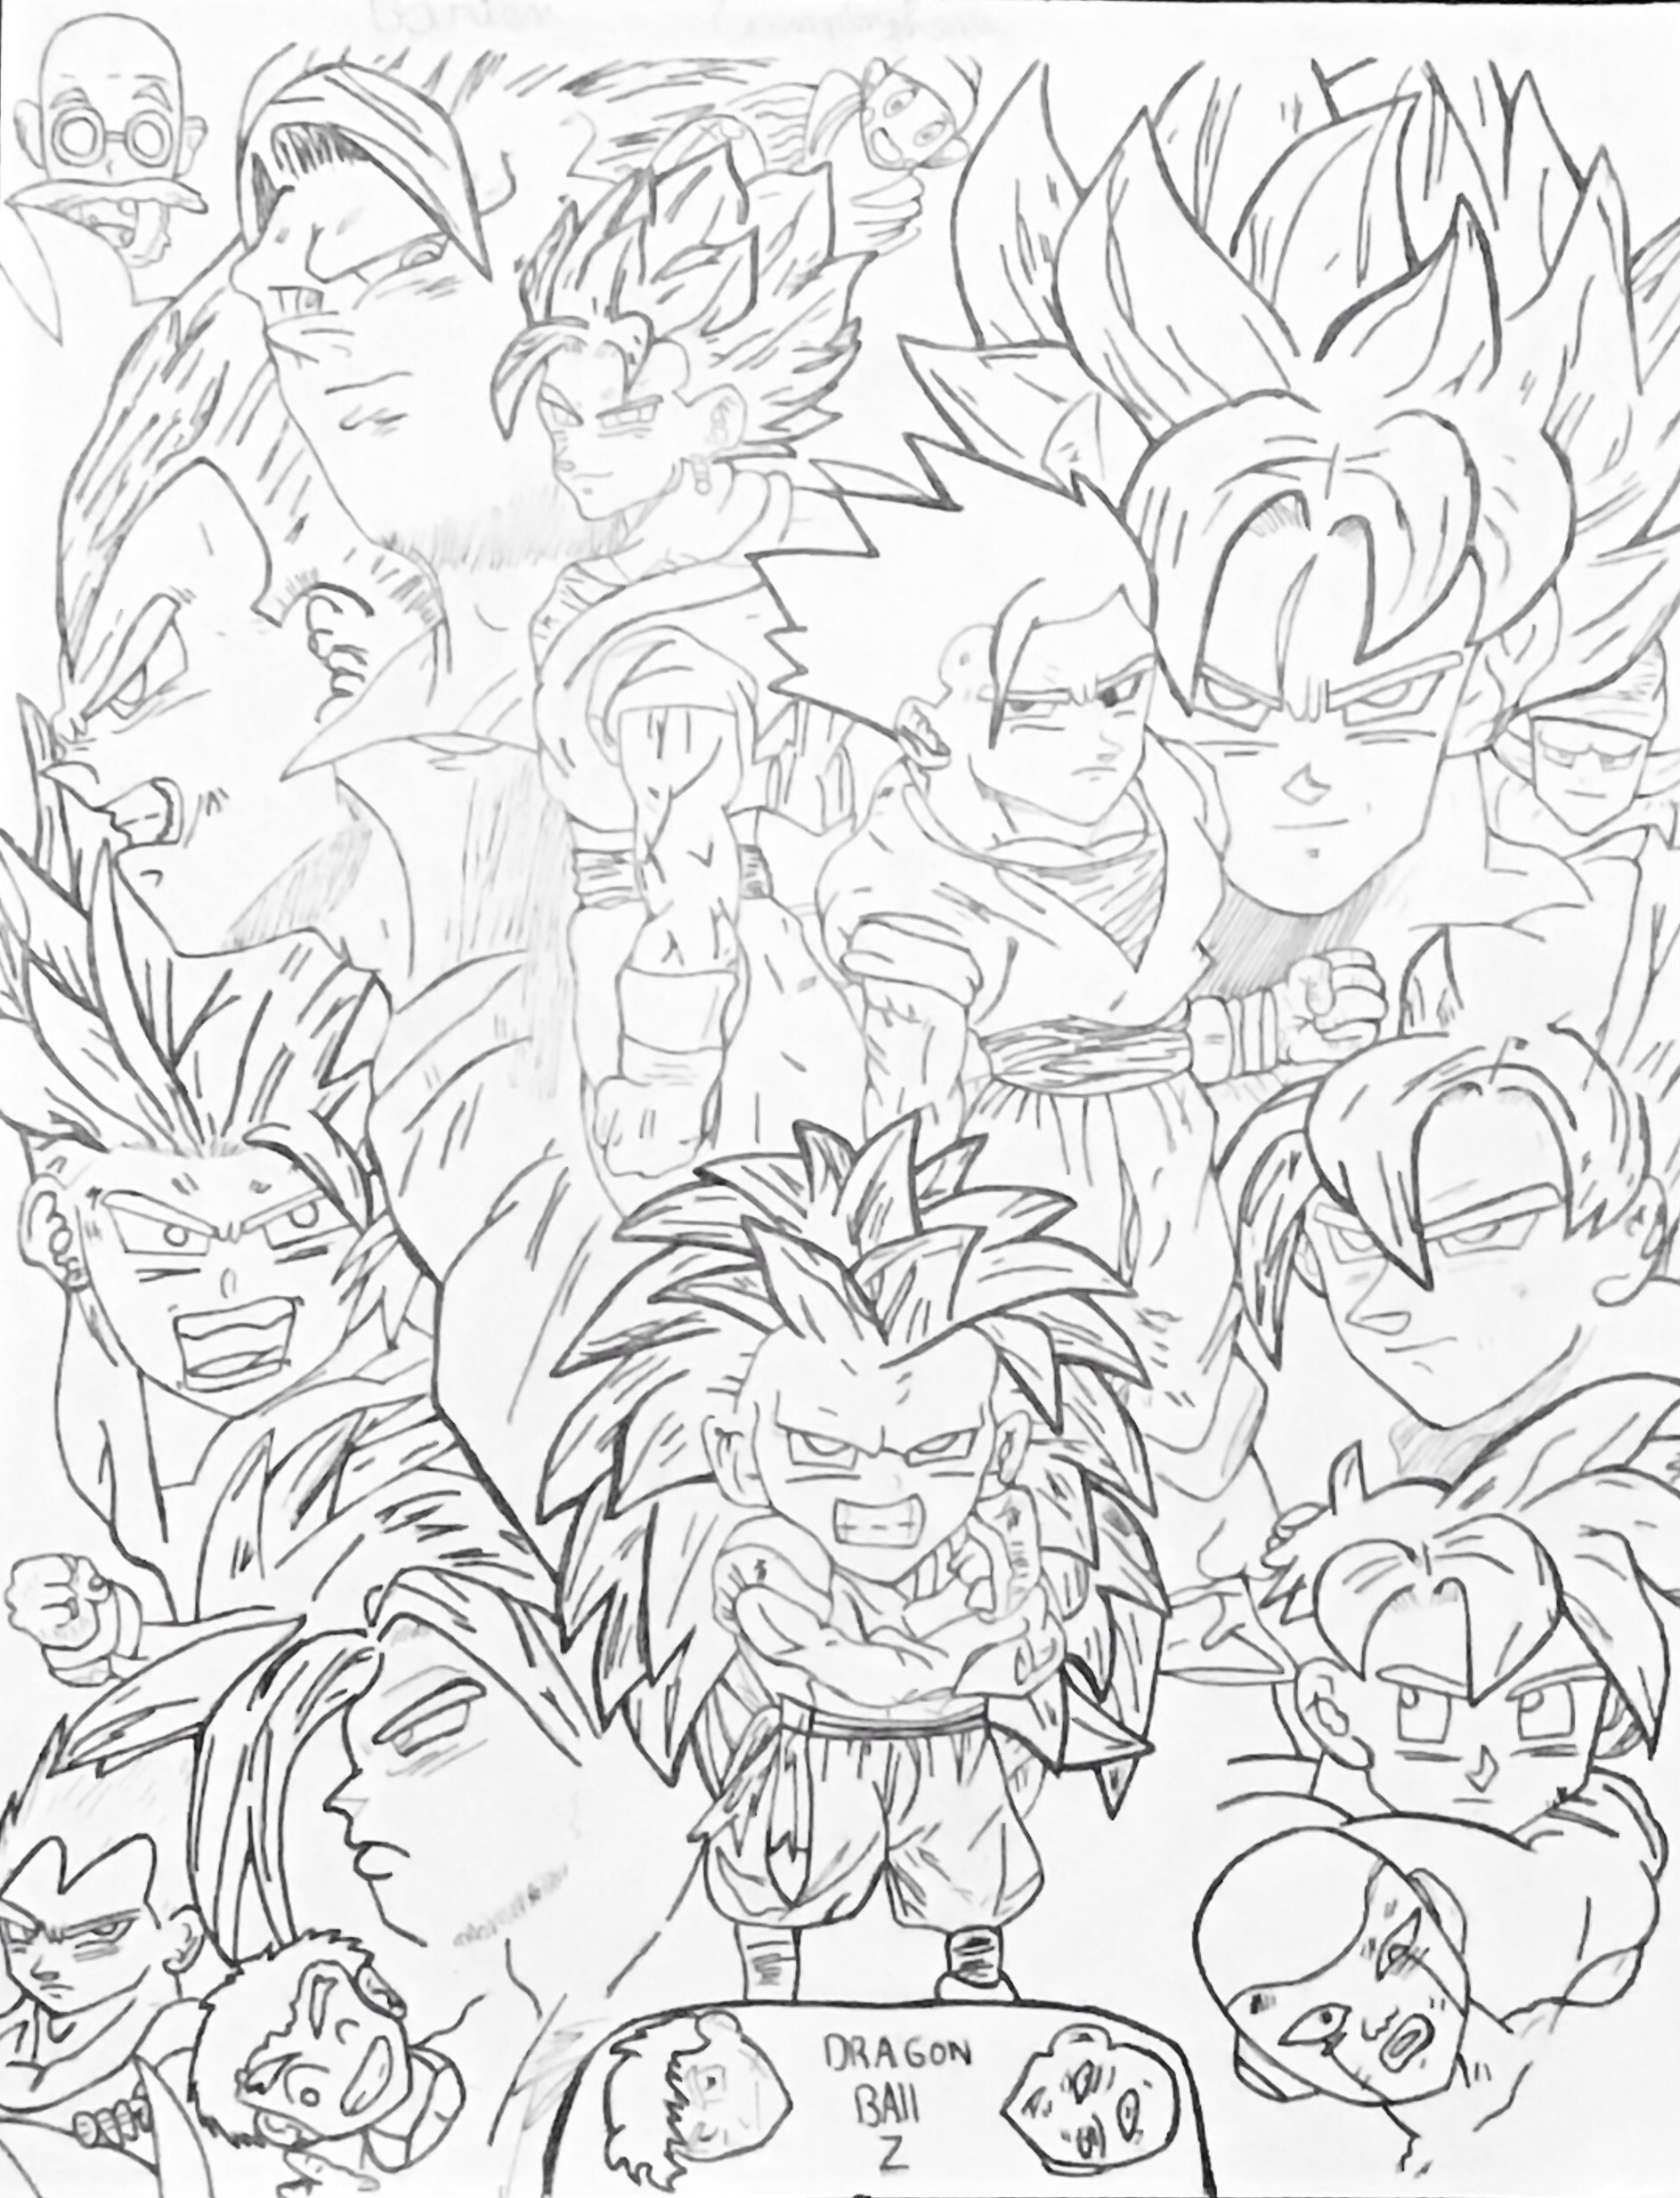 ArtStation - Dragon Ball Z manga page study